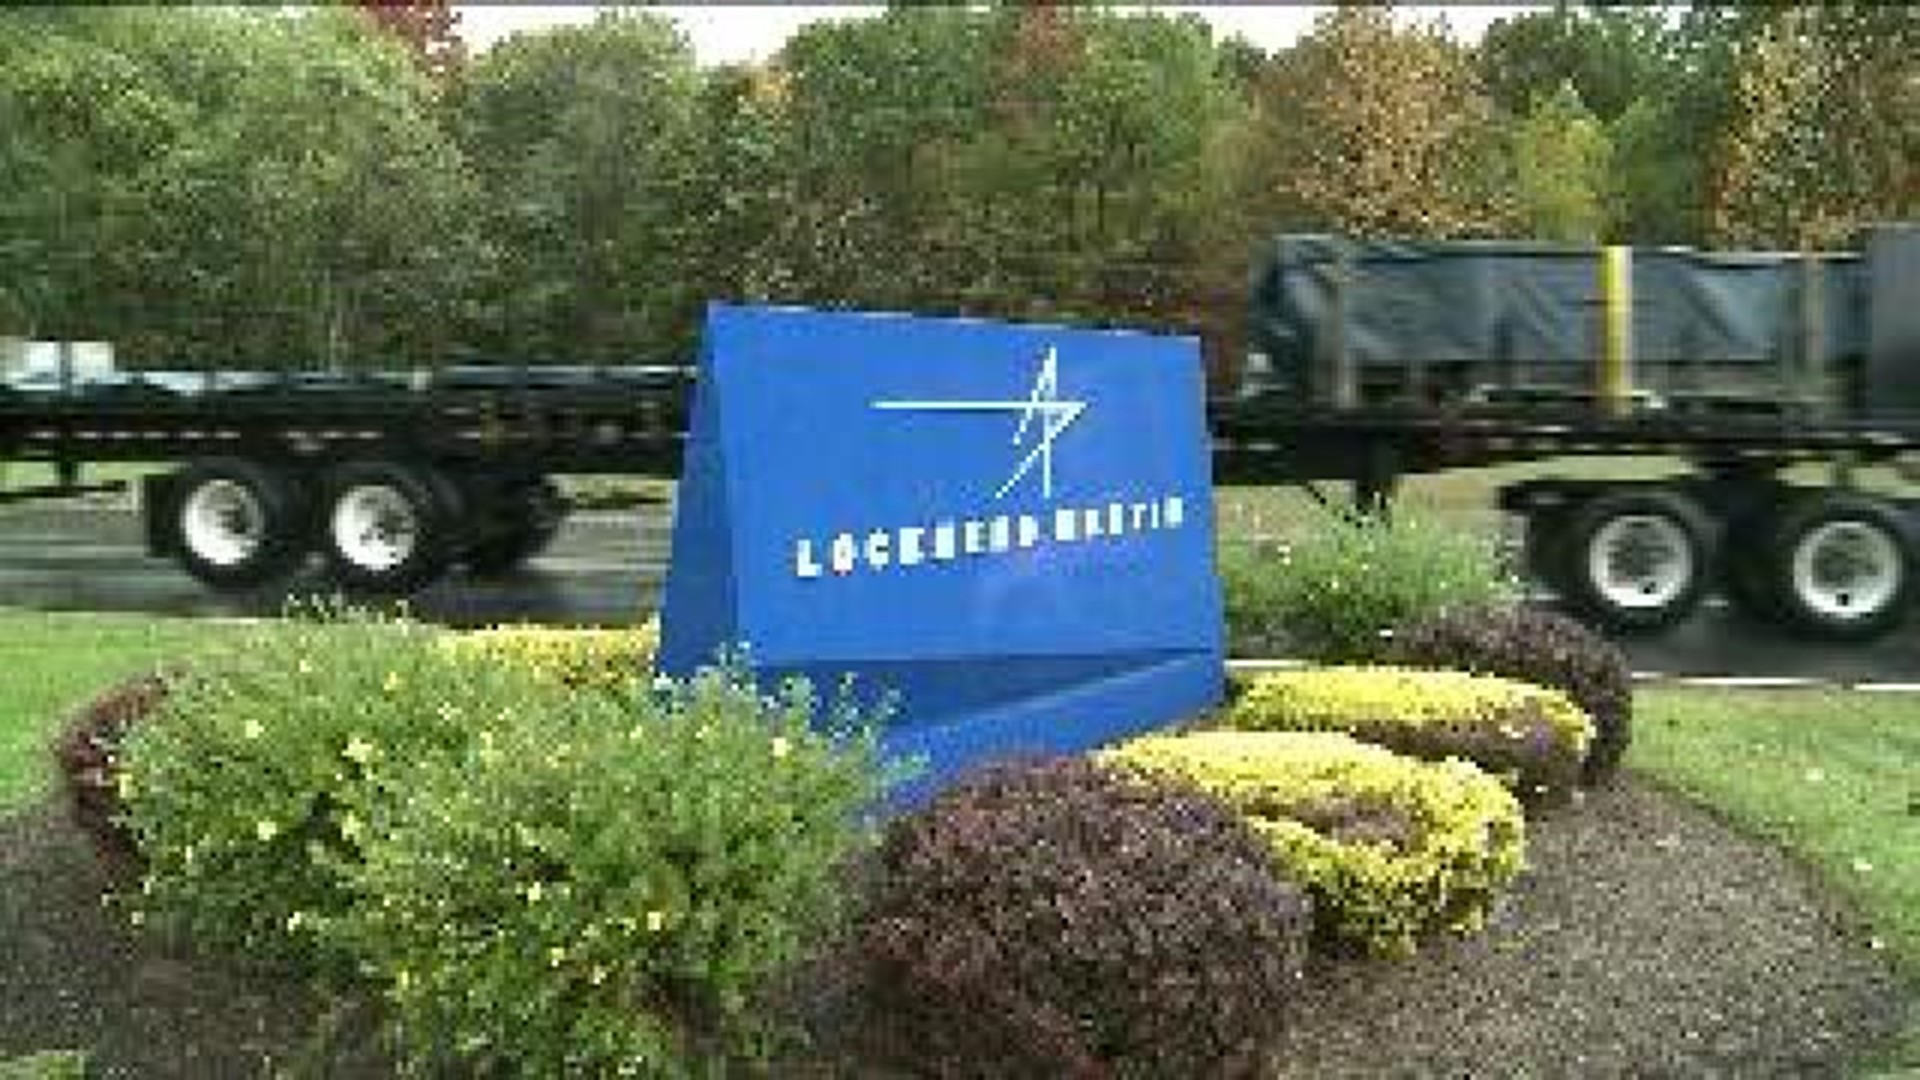 Shutdown Leads To Layoffs At Lockheed Martin